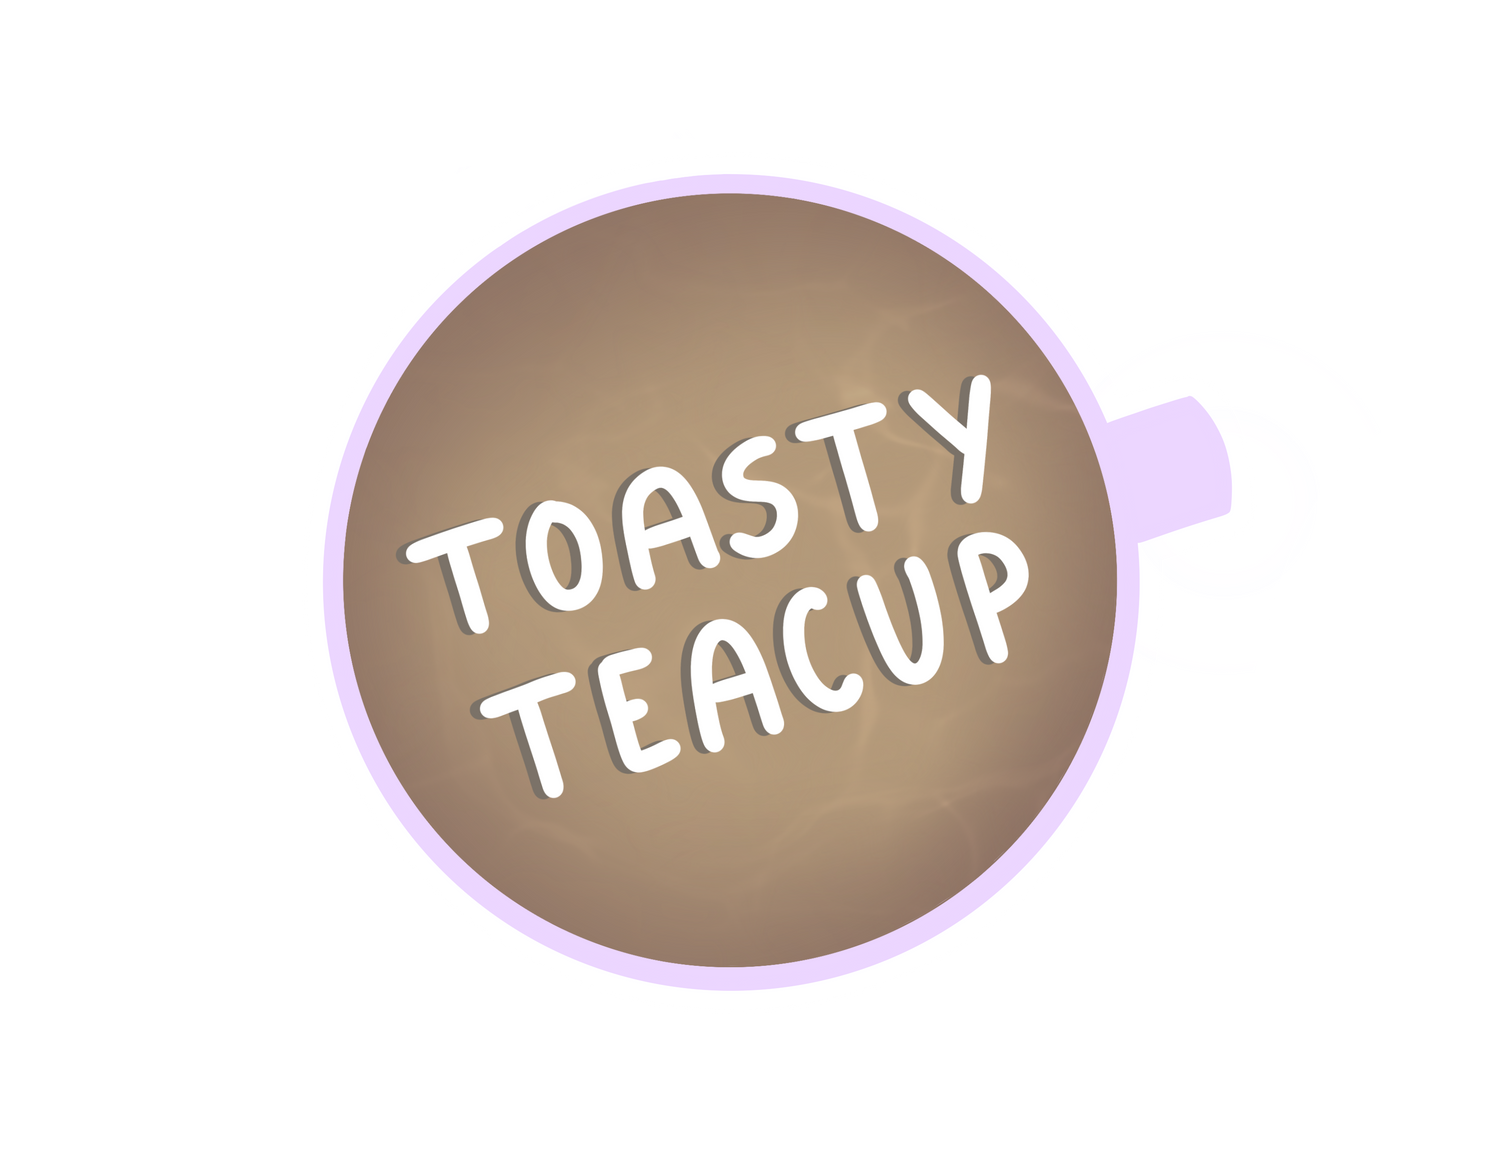 Toasty Teacup